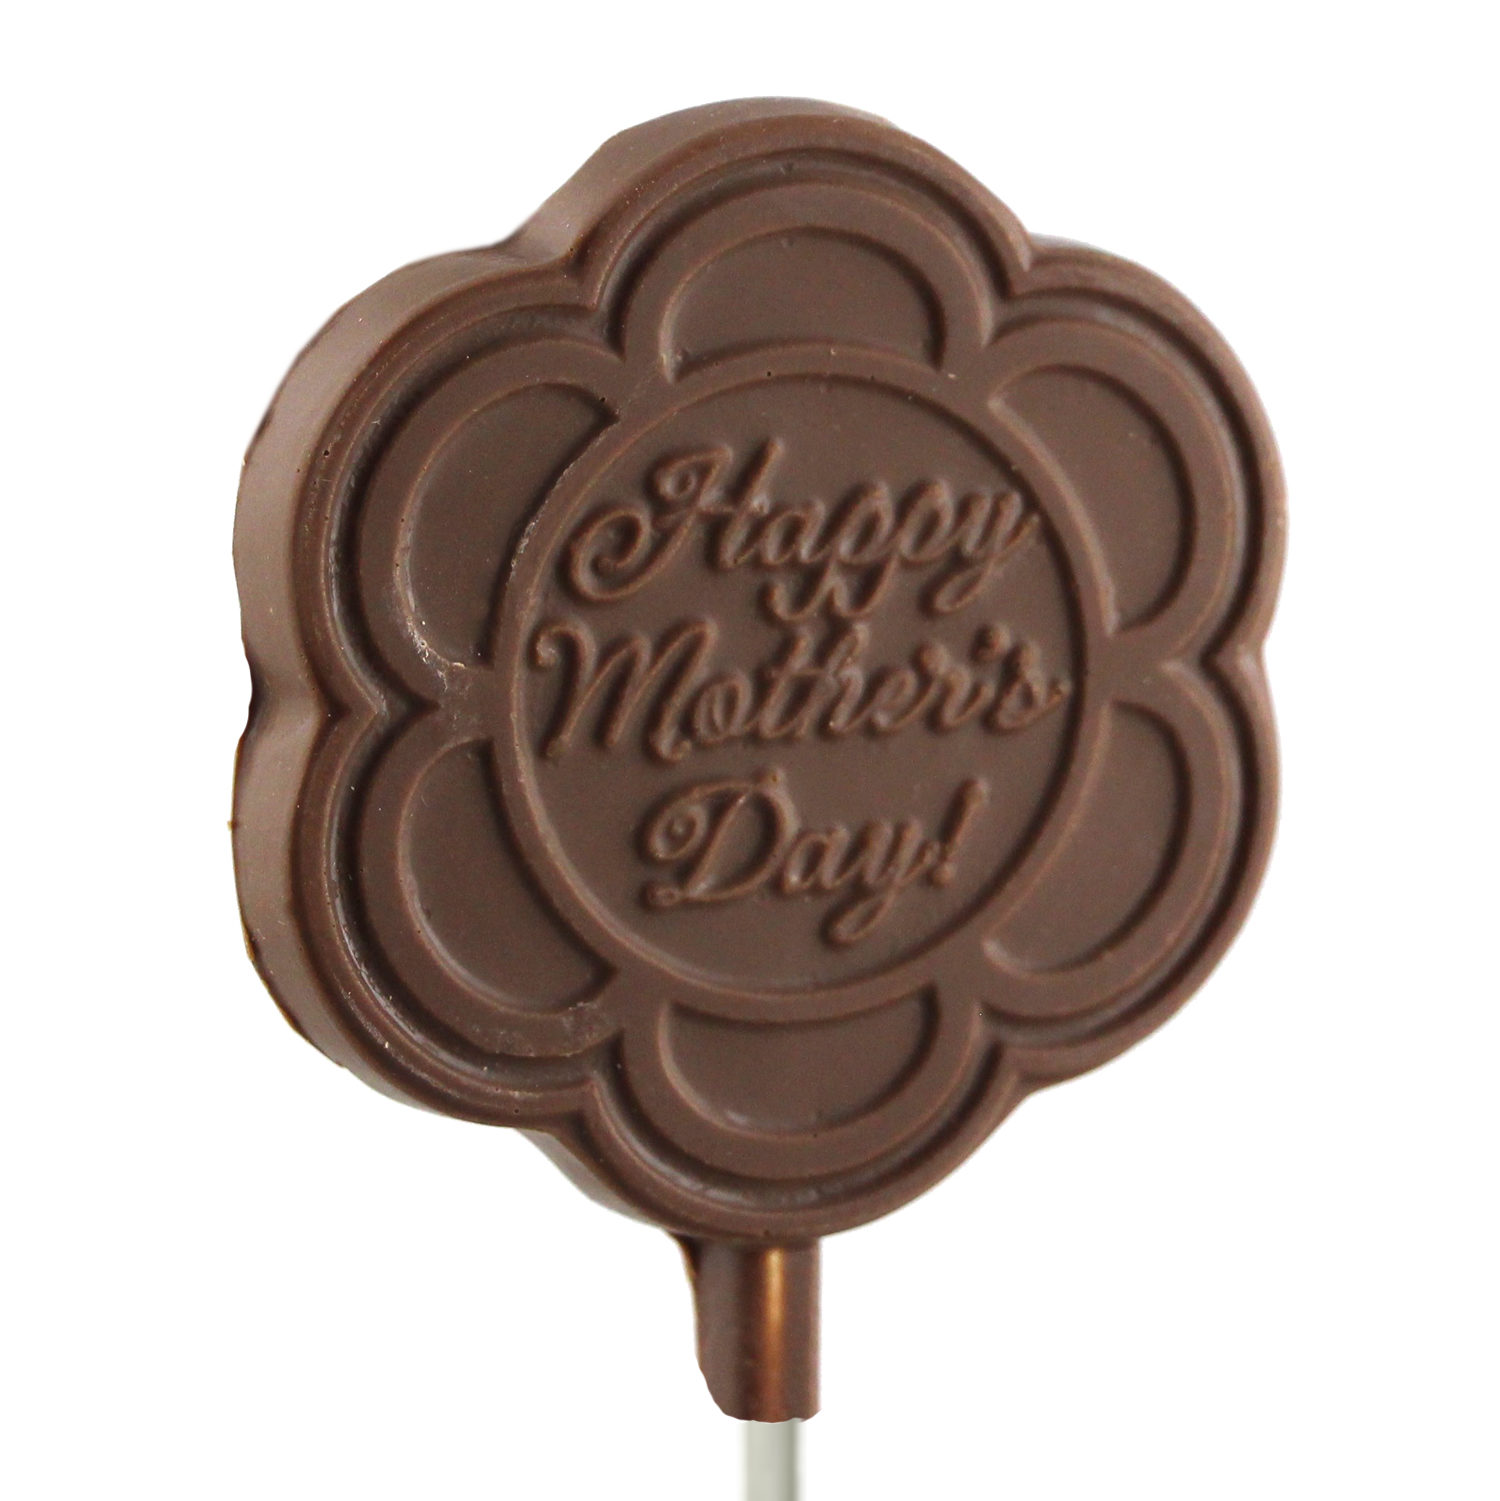 happy mothers day chocolates